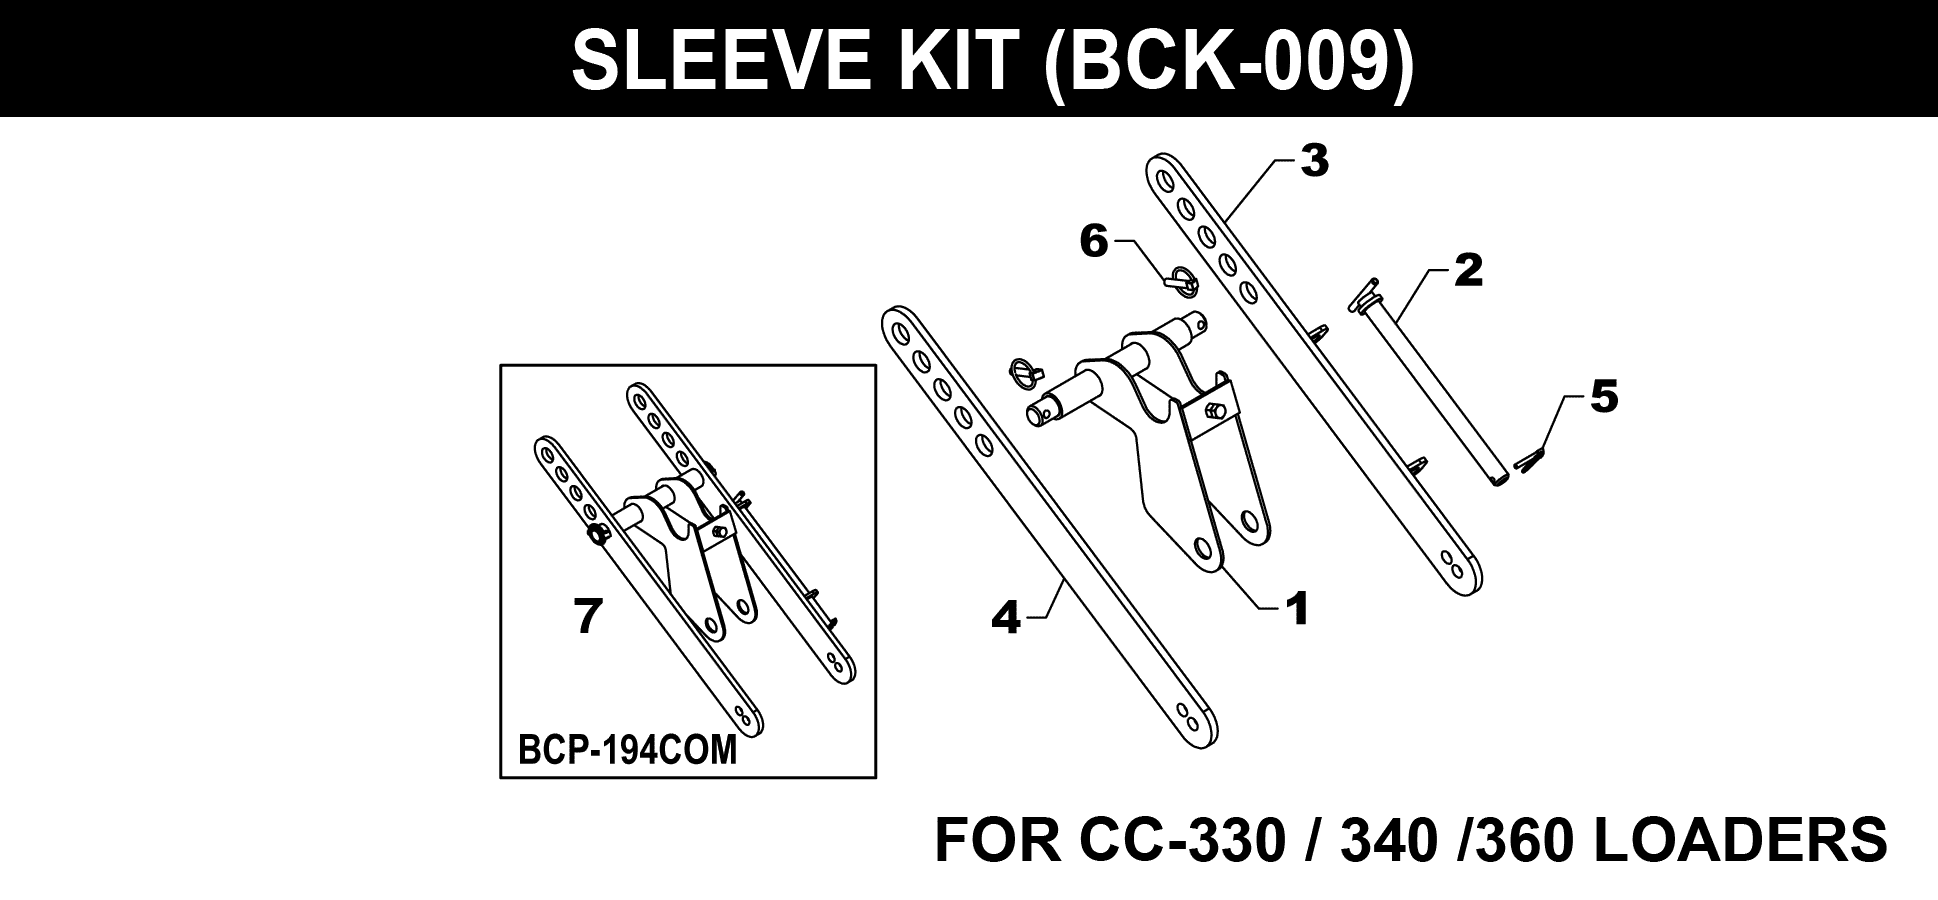 BCK-009 Sleeve Kit